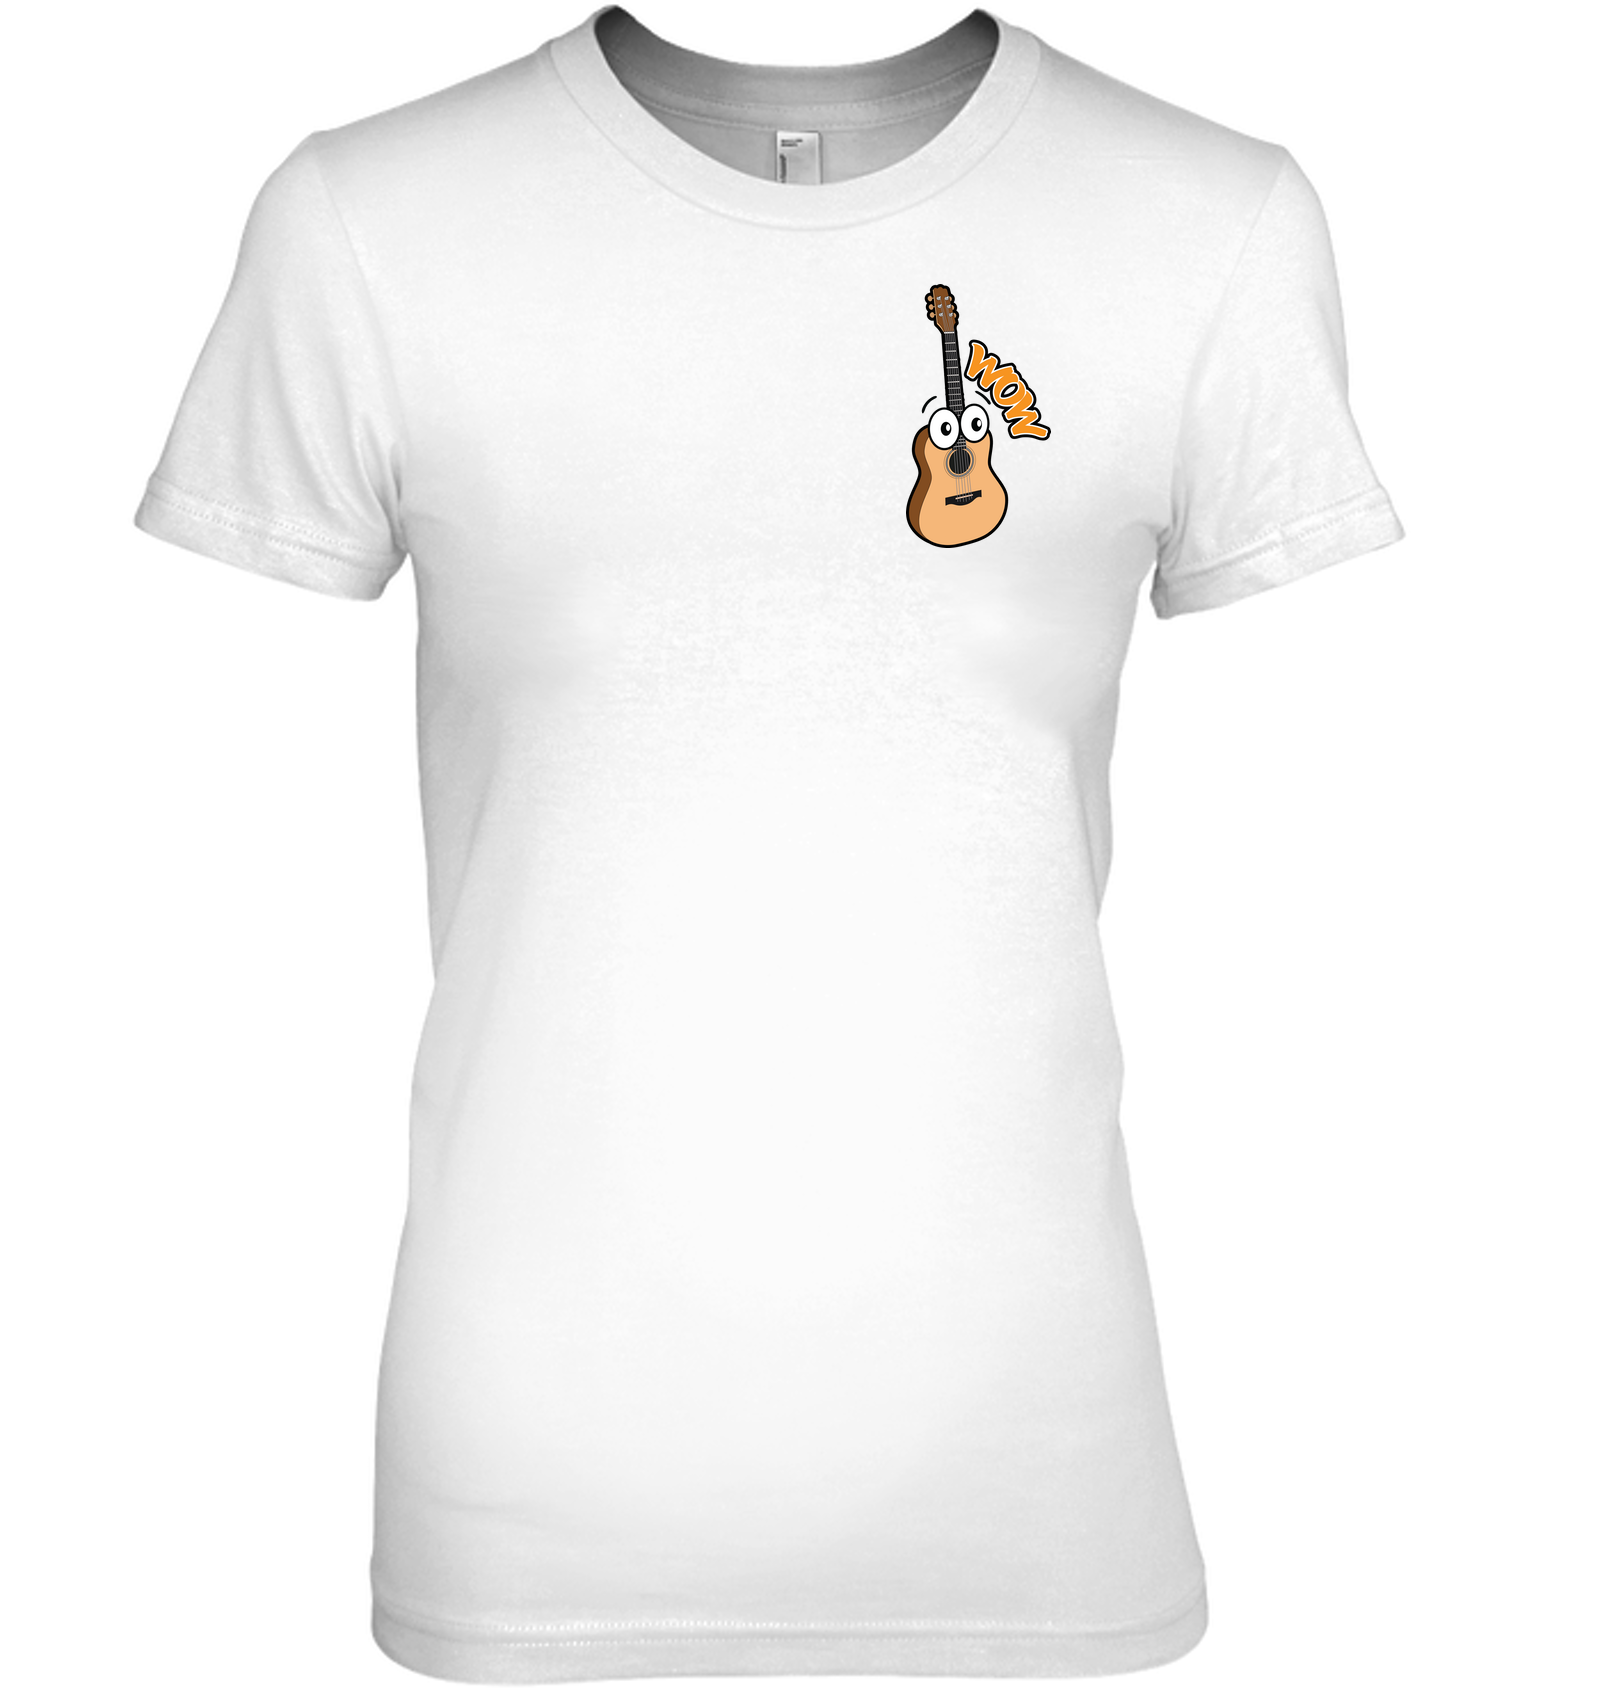 Wow Guitar (Pocket Size) - Hanes Women's Nano-T® T-Shirt